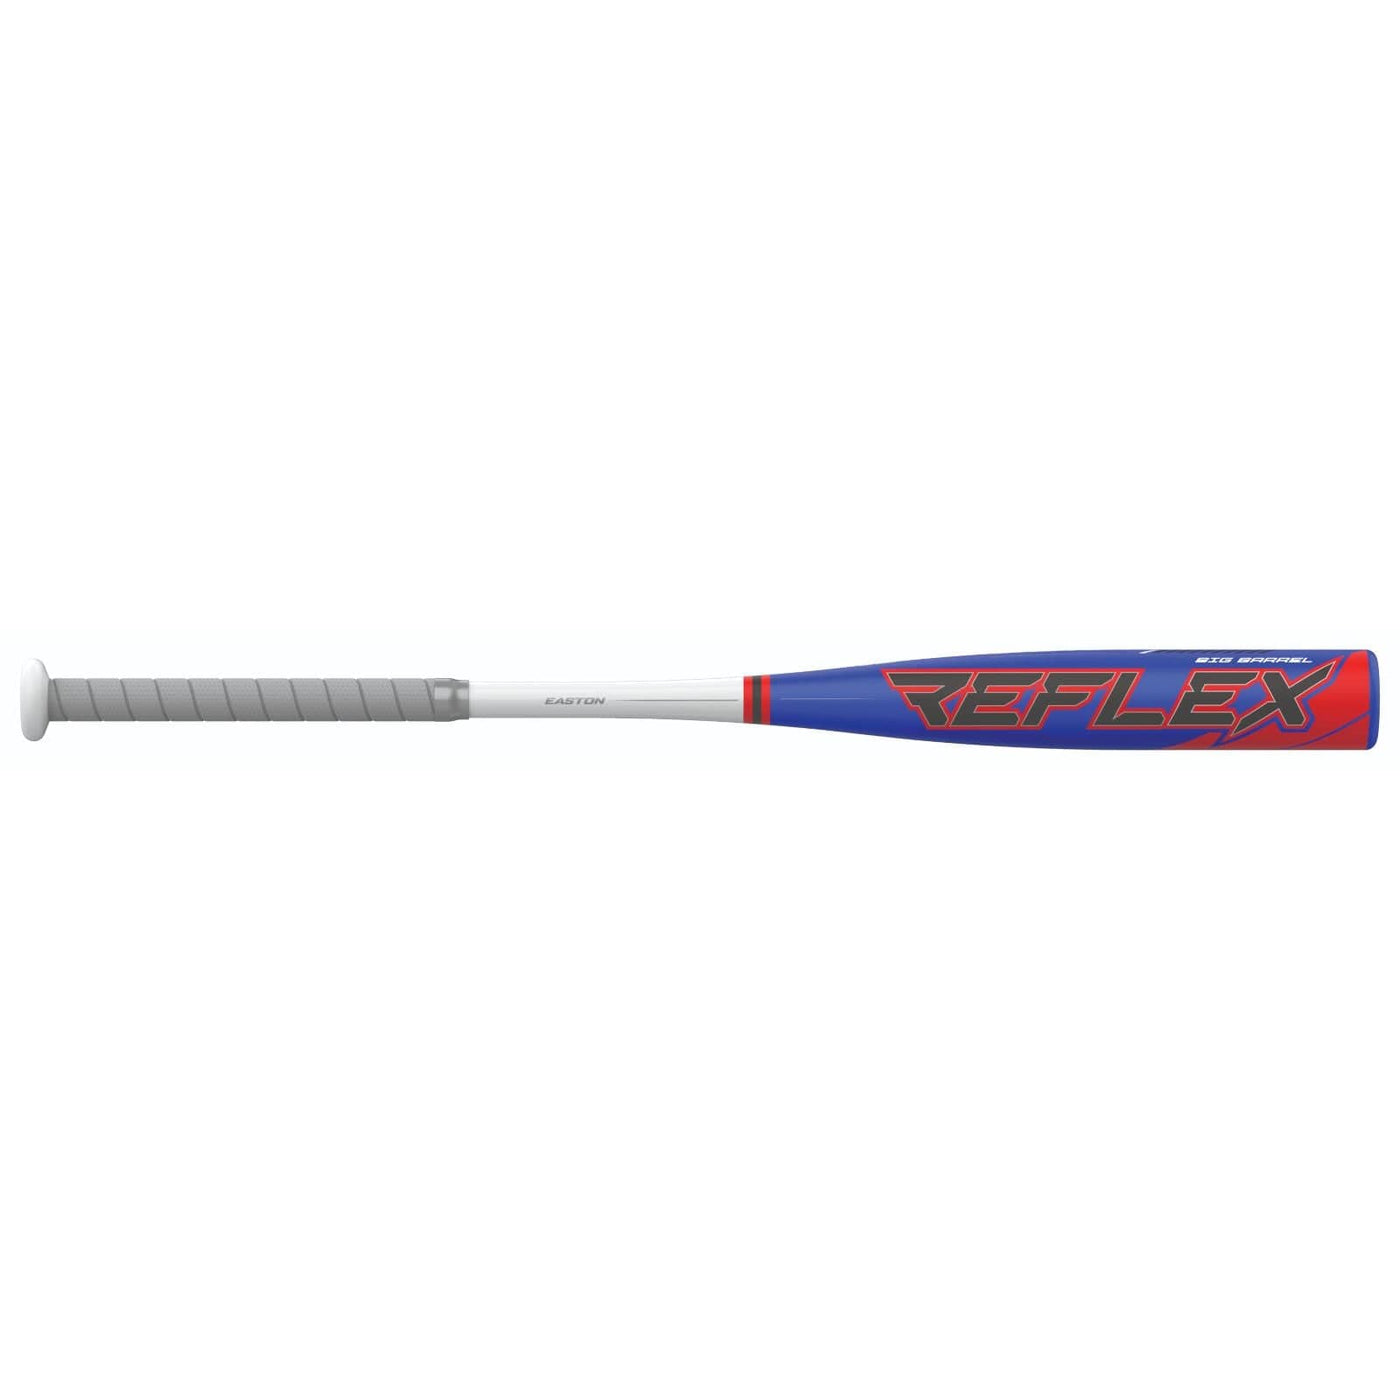 Easton Easton Reflex USA Youth Baseball Bat -12 28in/16oz Sports